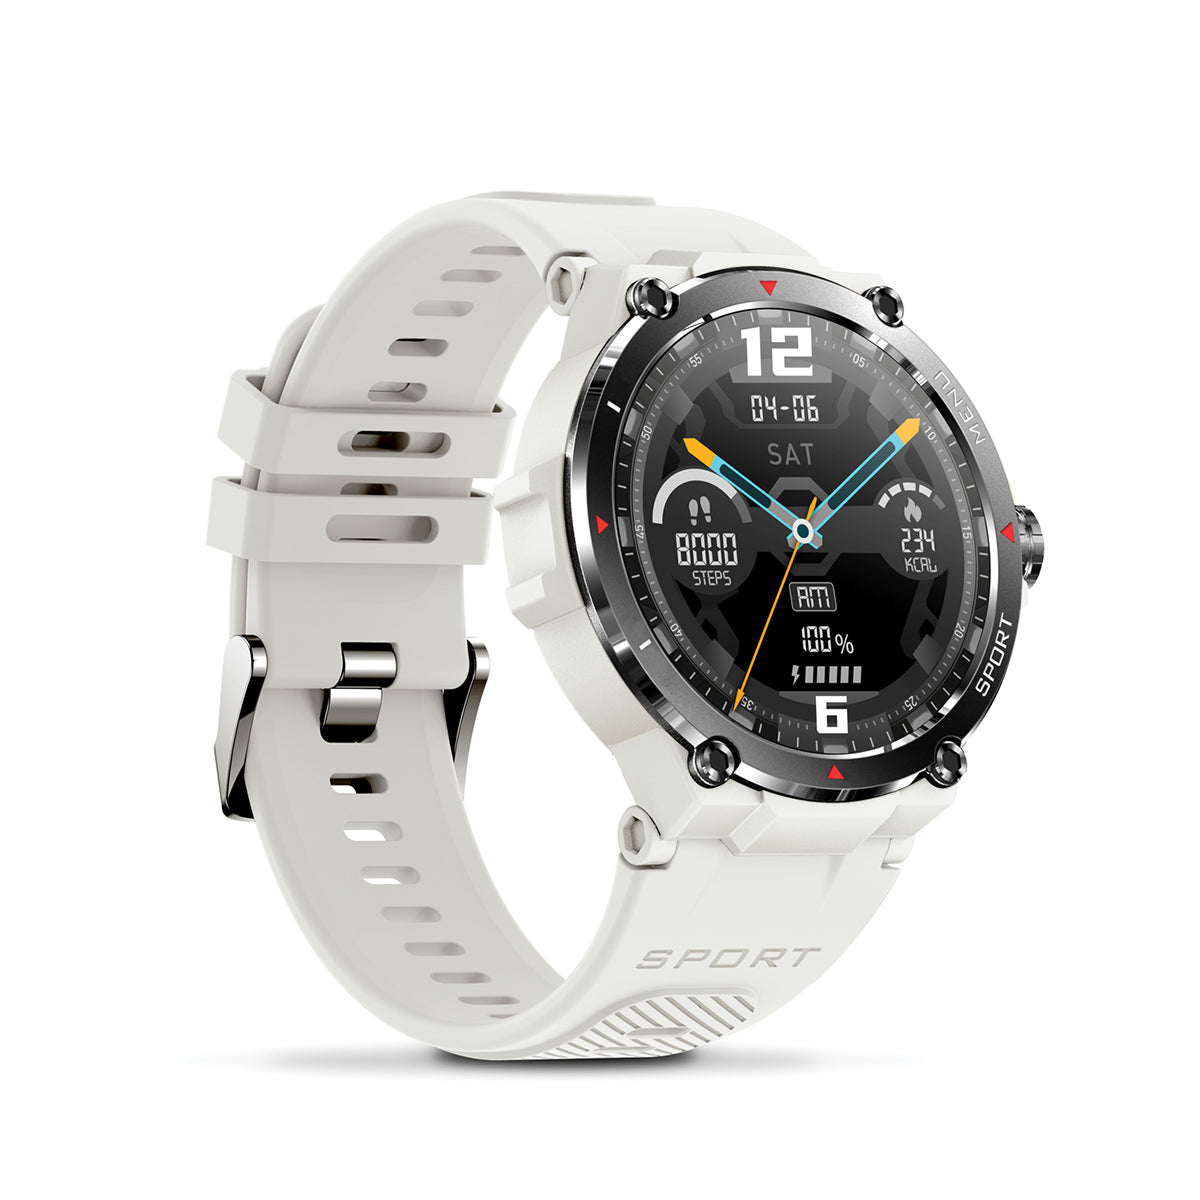 Veho Kuzo F1-S GPS Sports Smartwatch